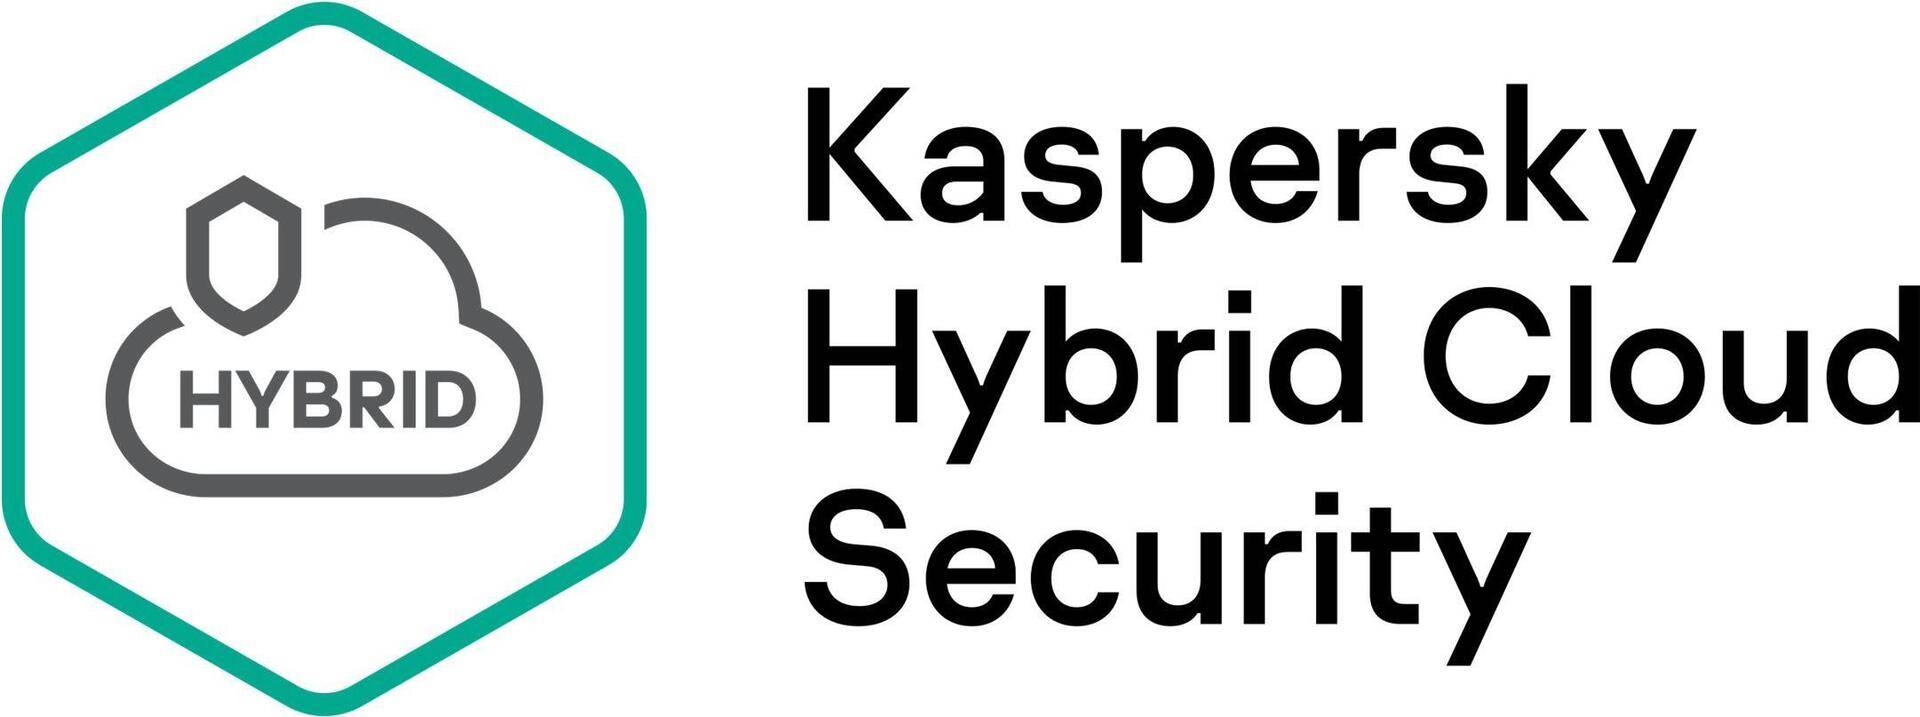 Kaspersky Hybrid Cloud Security Enterprise CPU European Edi. 10-14 CPU 1-Year Renewal License (KL4553XAKFR) von Kaspersky Lab